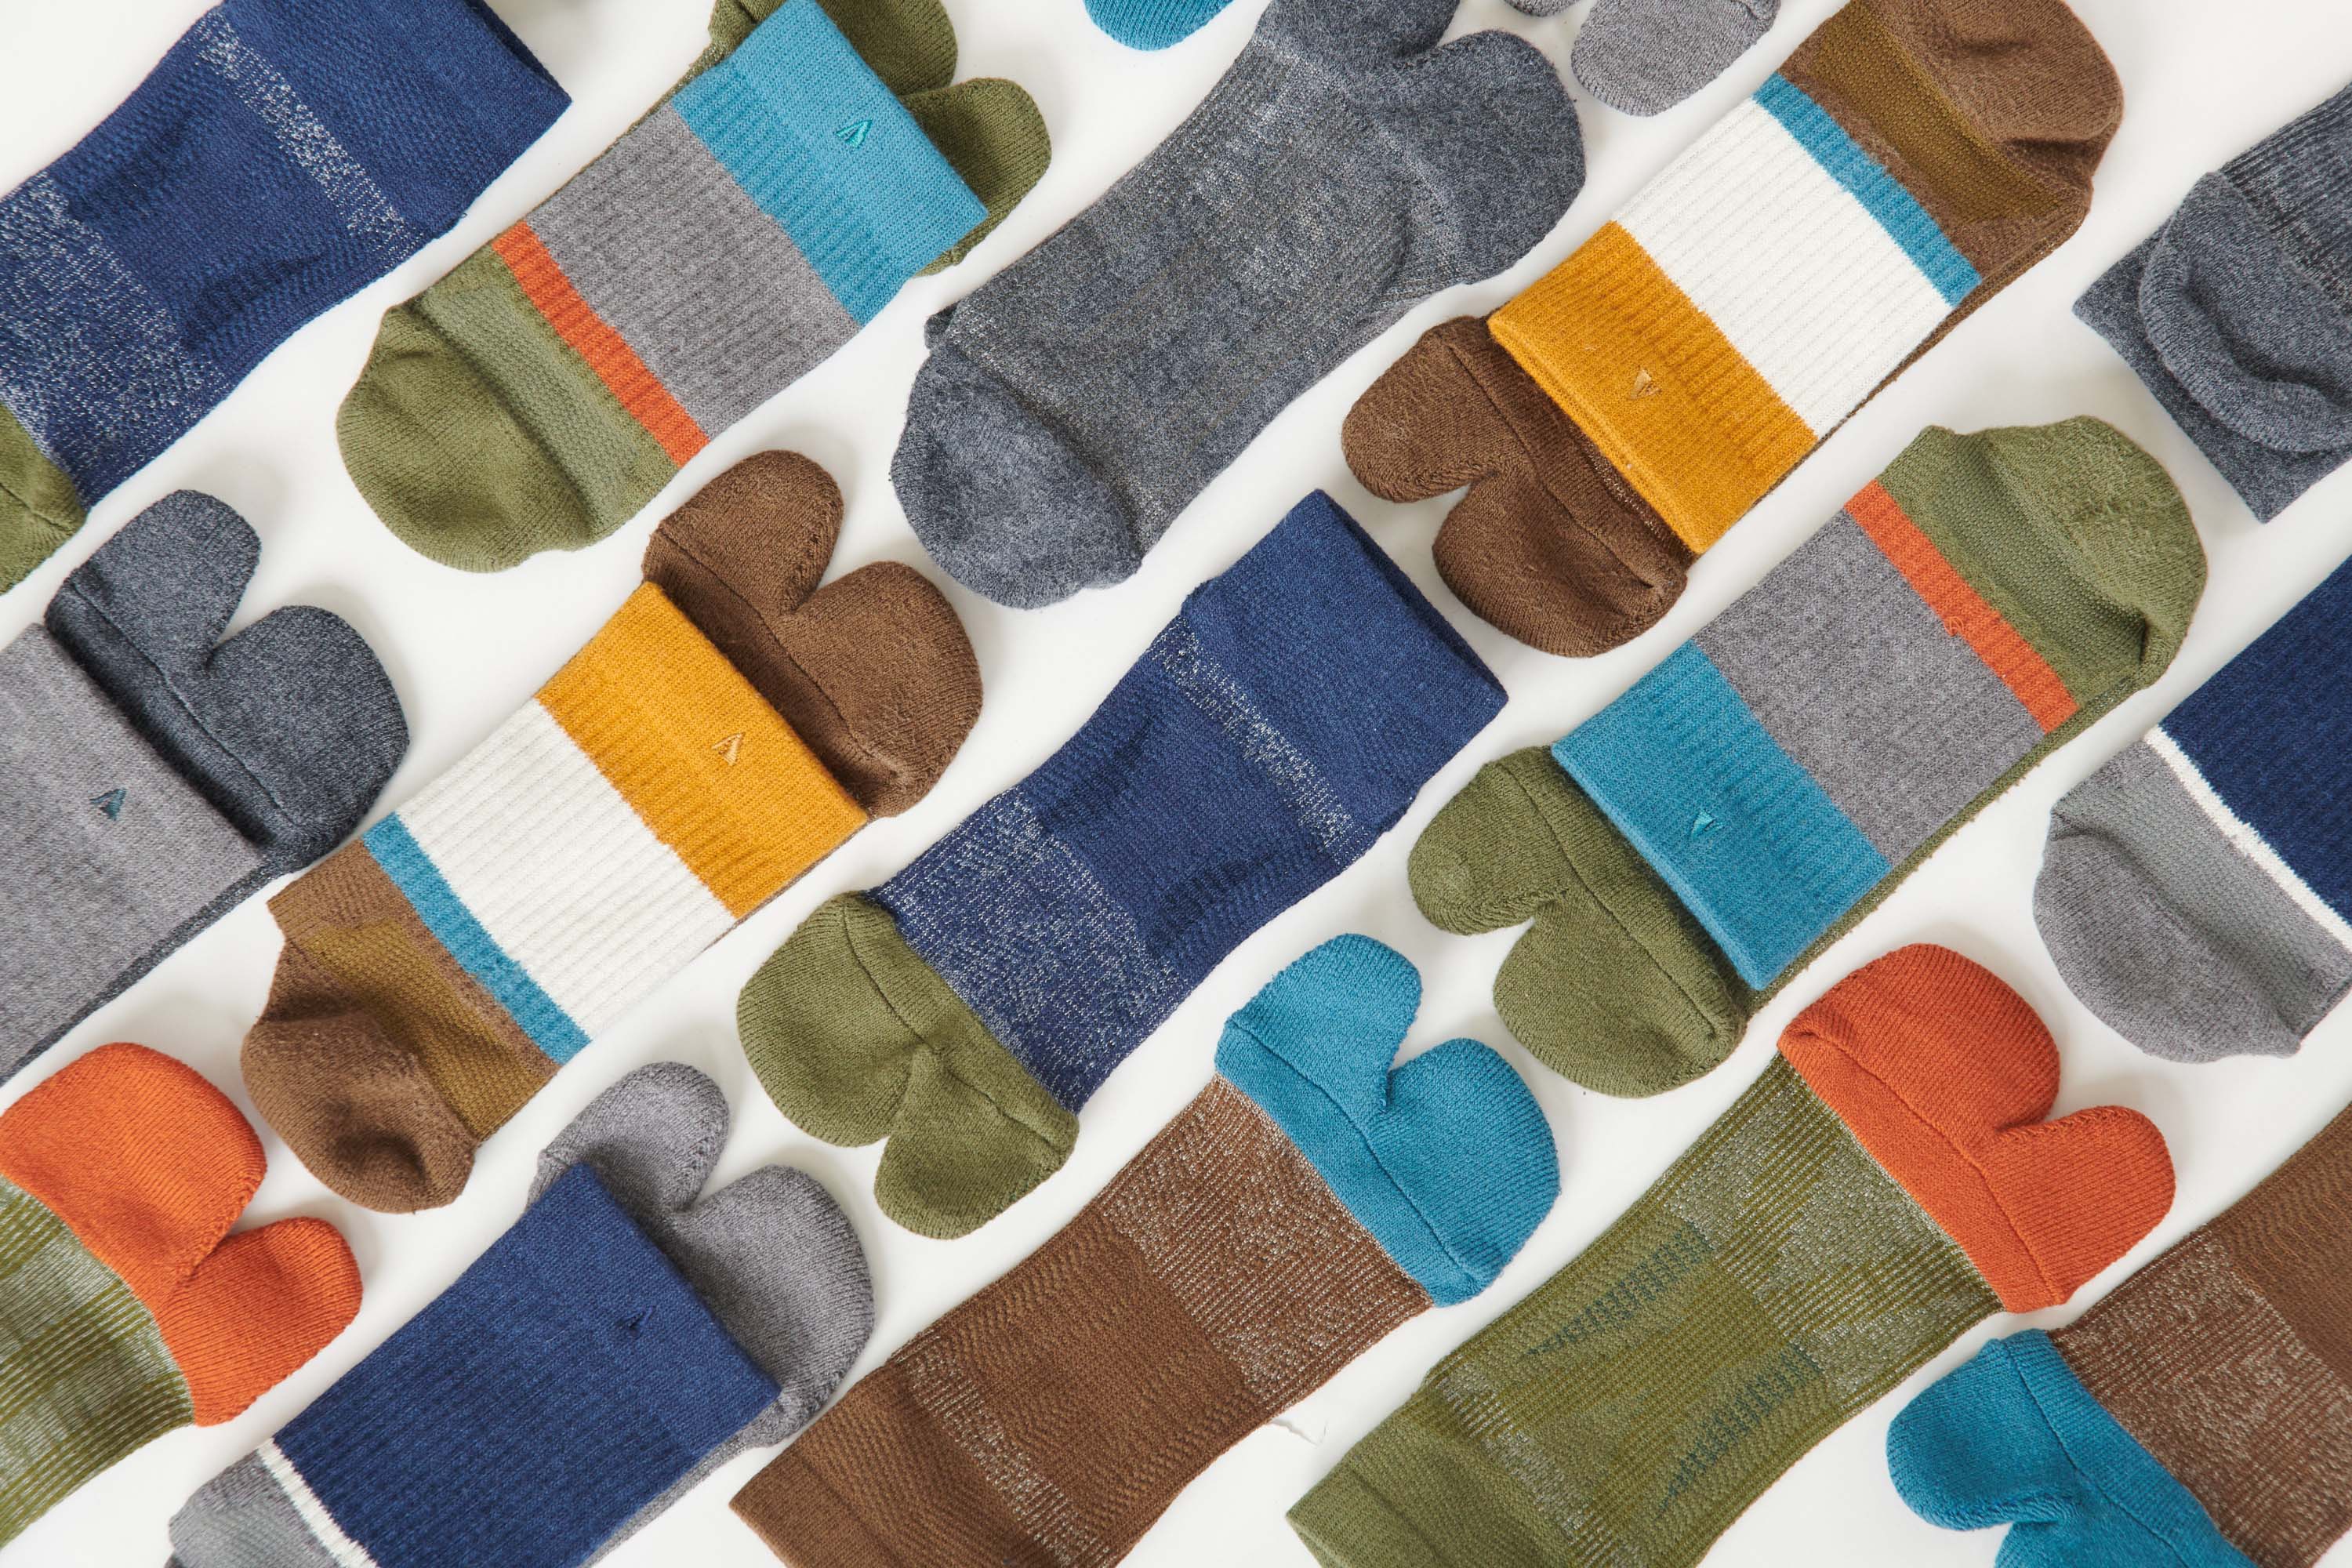 /features/yamap-original-trail-socks